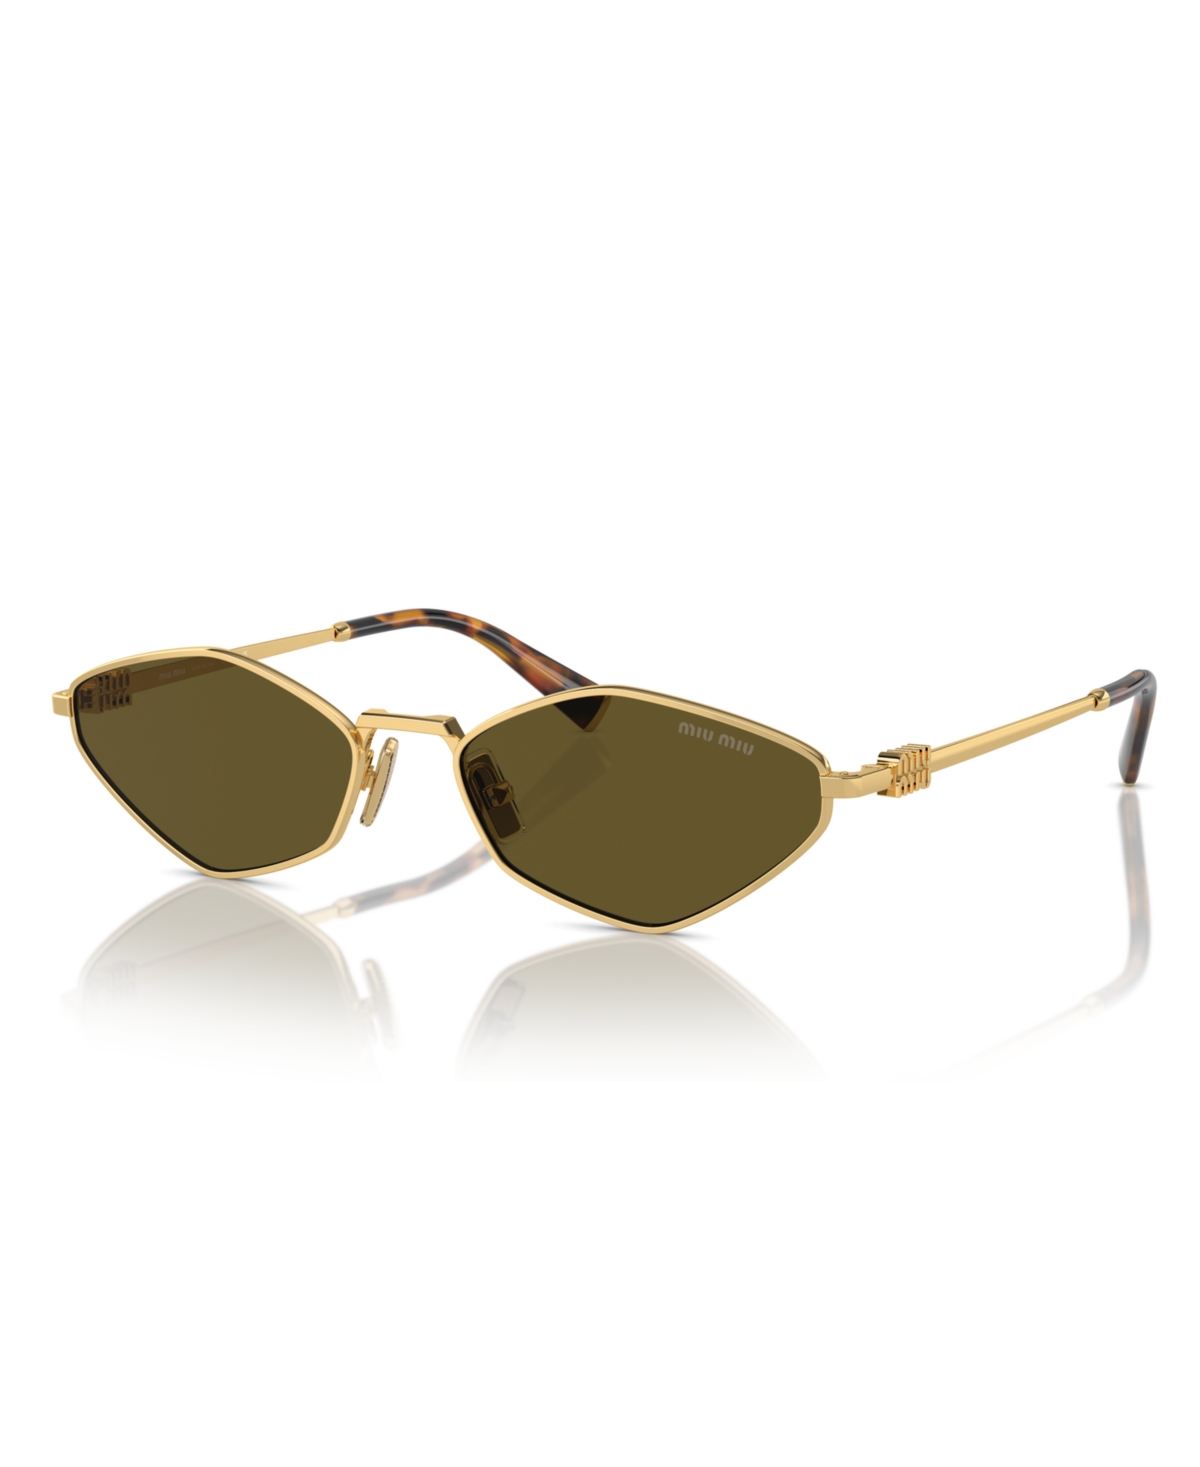 Women's Sunglasses, Mu 56Zs - Gold, Brown